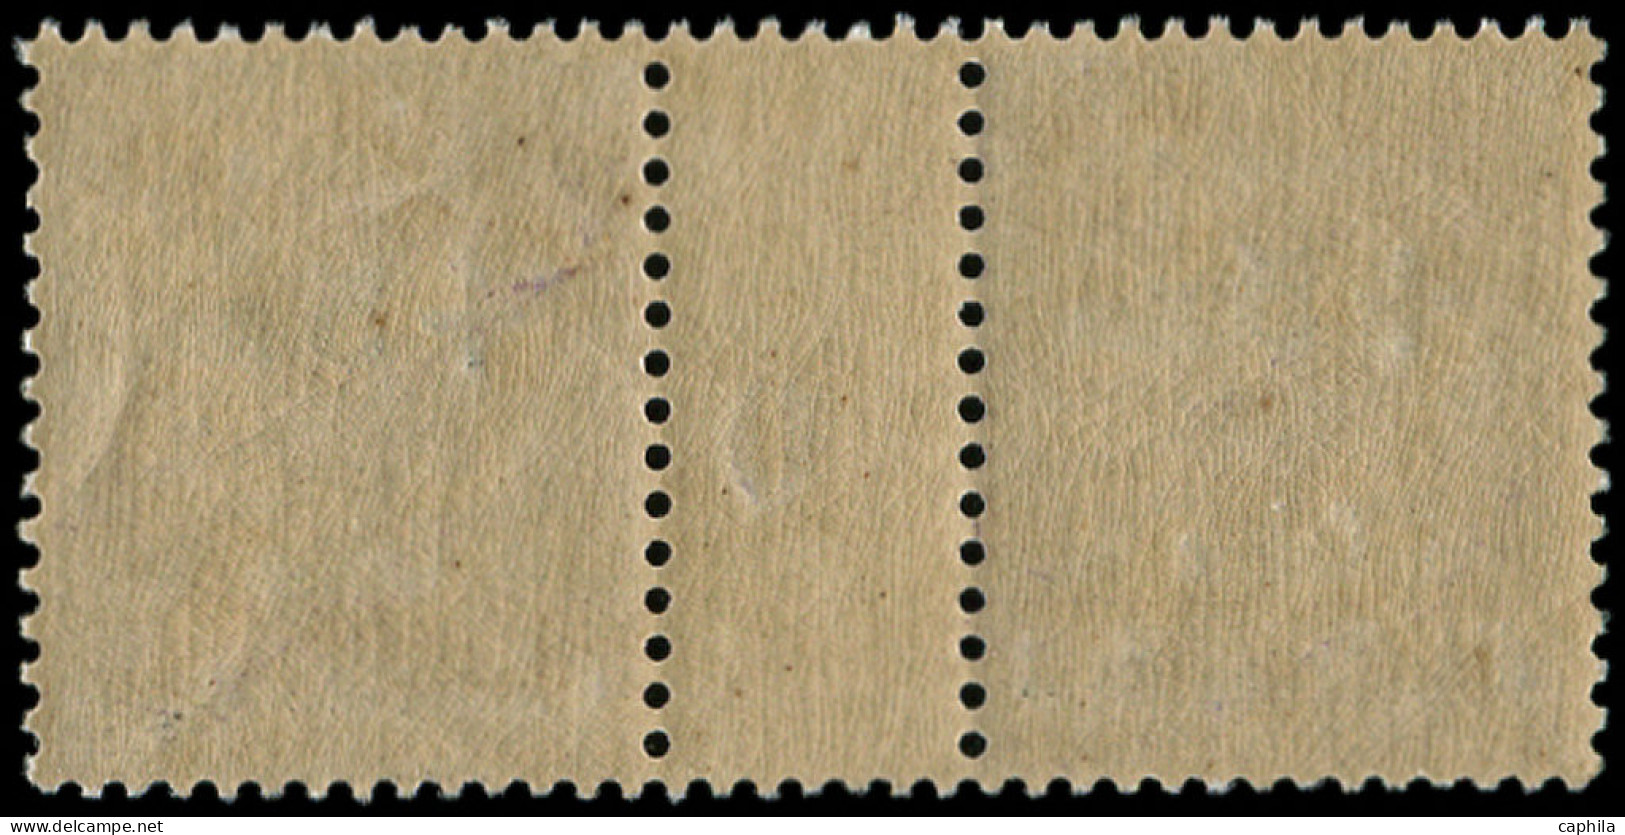 ** ALEXANDRIE - Poste - 84, Paire Millésime "0" - Unused Stamps